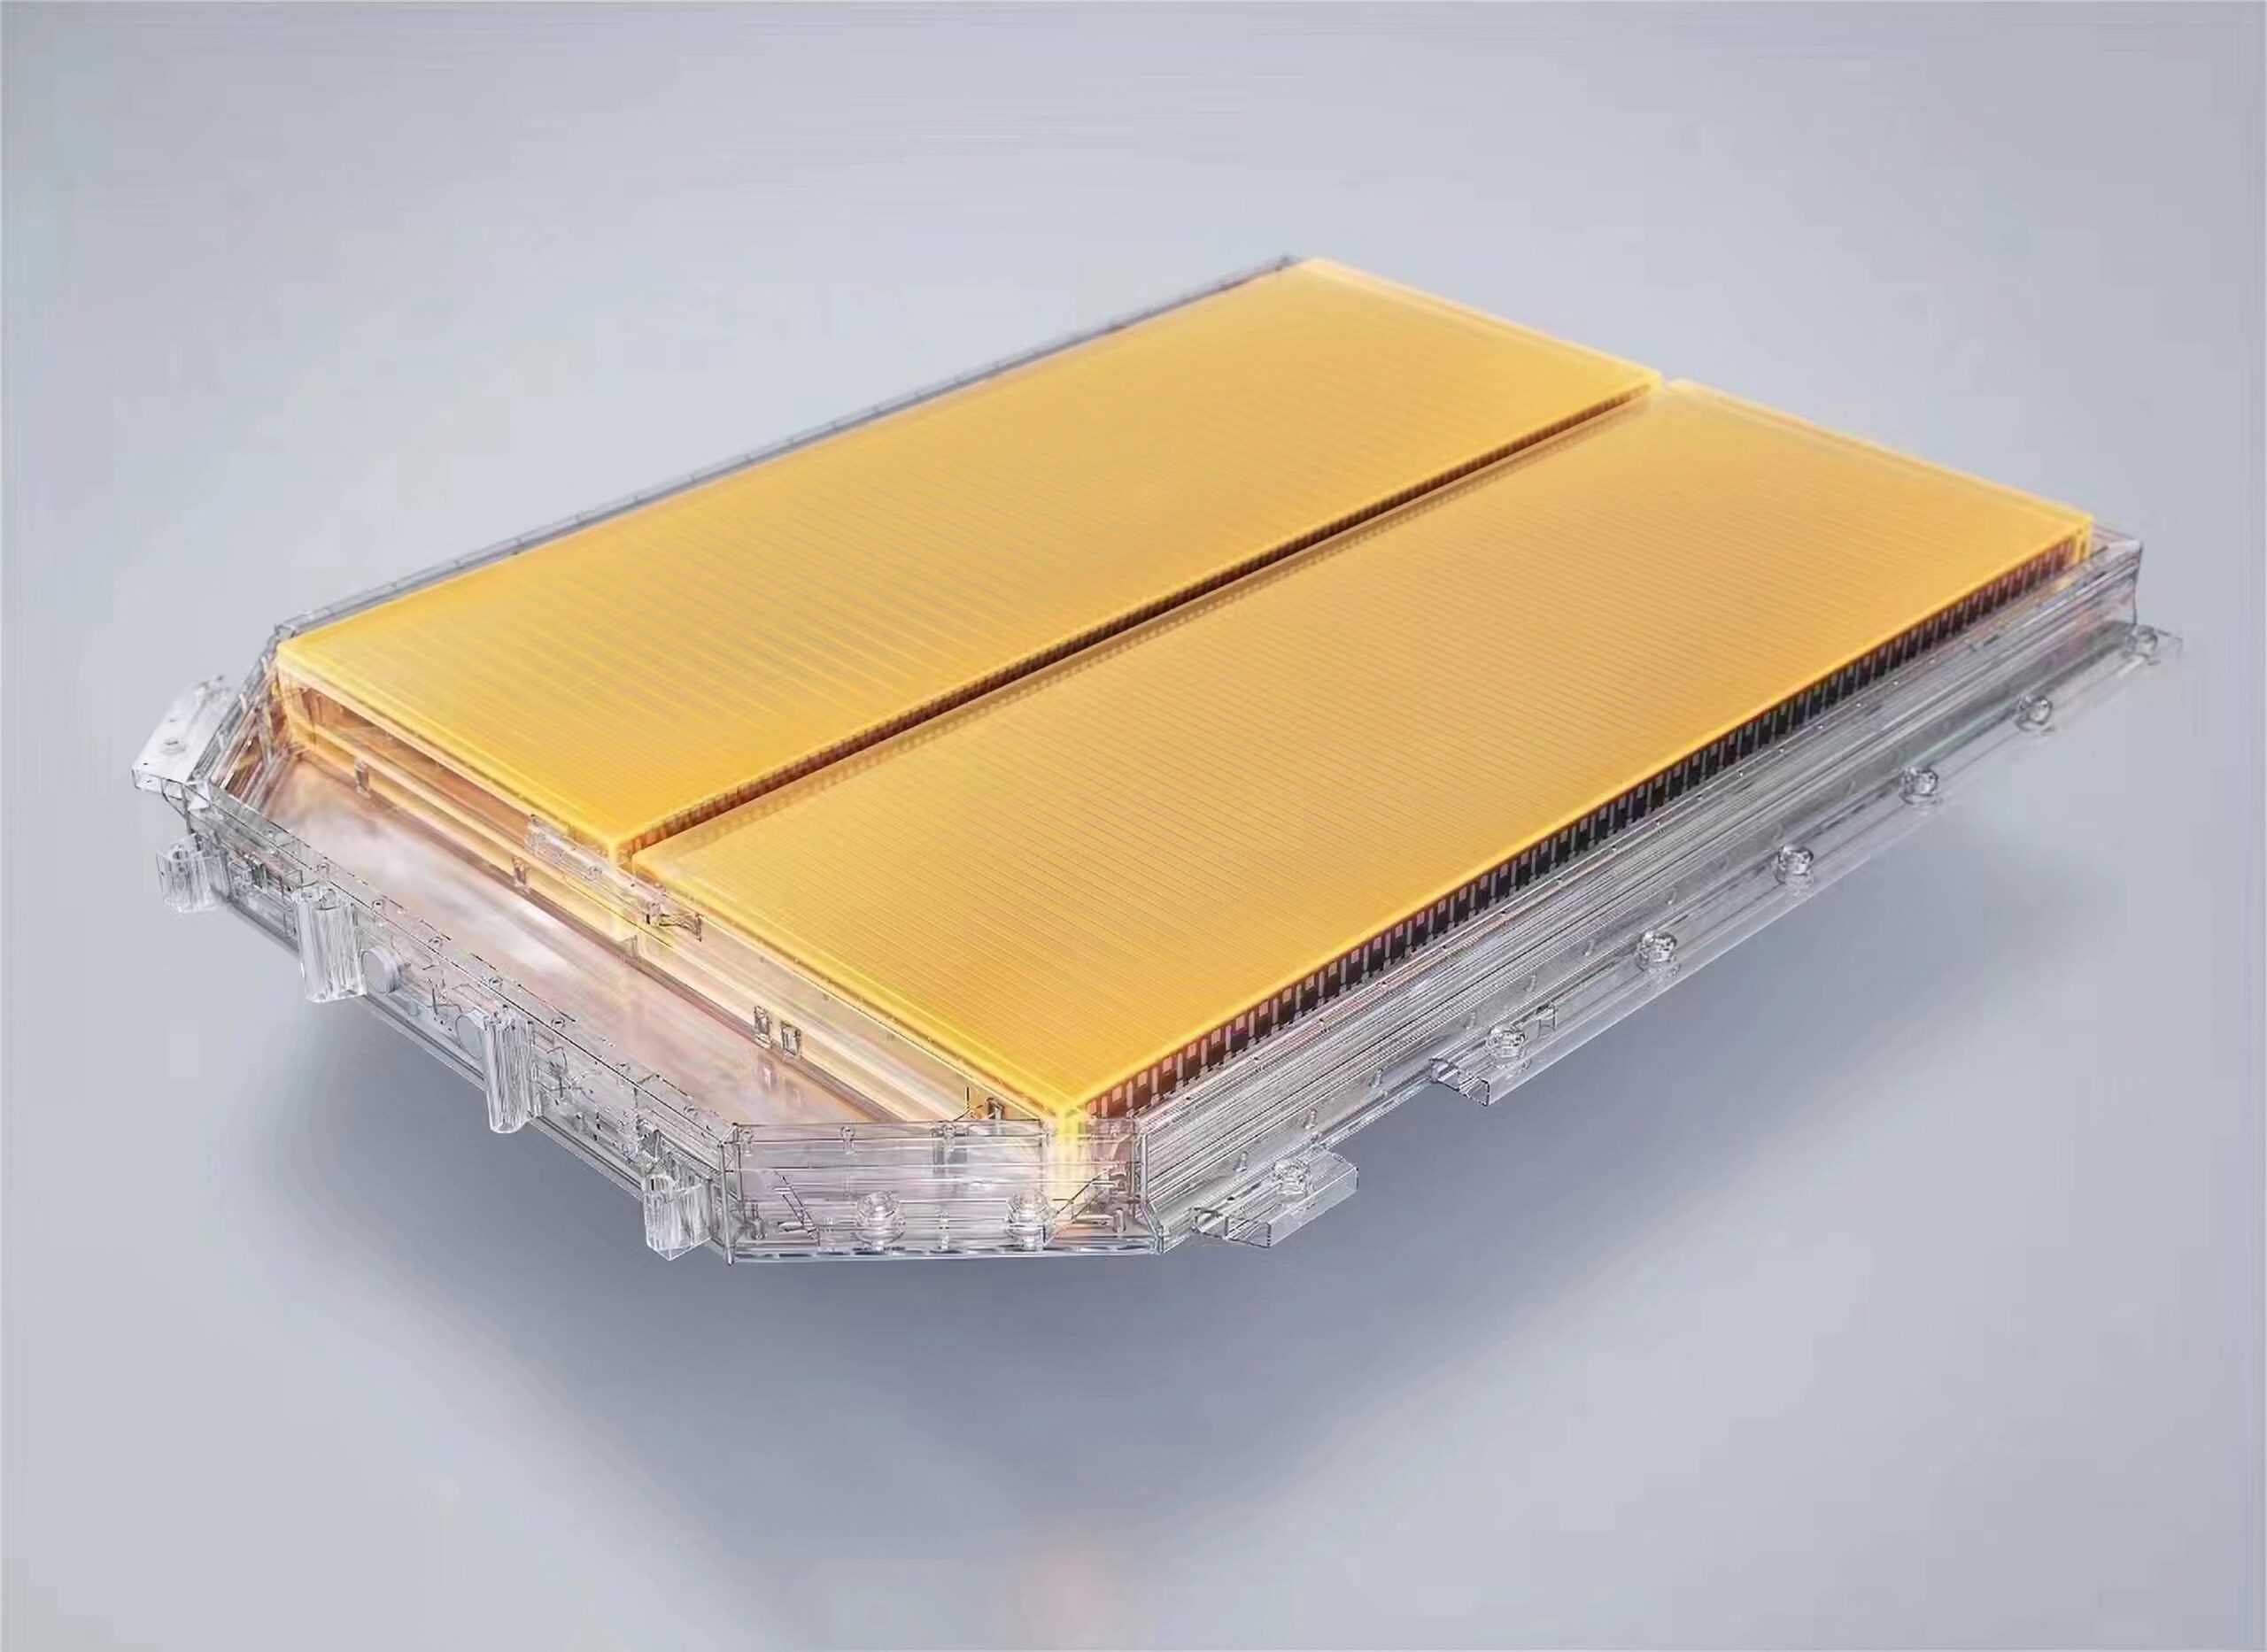 Новые золотые батареи Zeekr... золотые - CleanTechnica